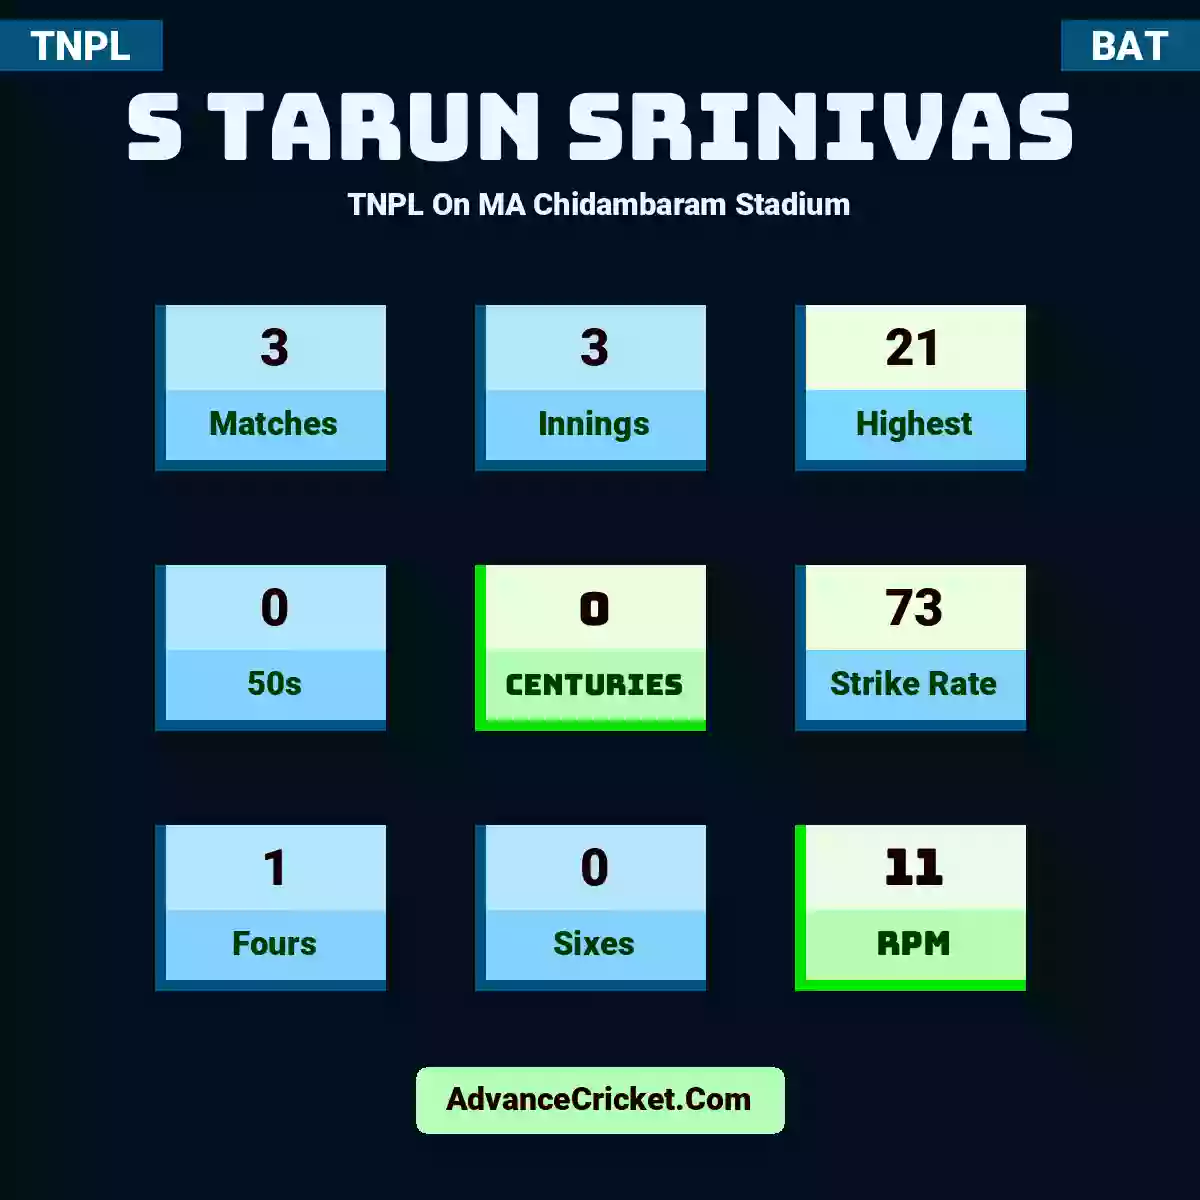 S Tarun Srinivas TNPL  On MA Chidambaram Stadium, S Tarun Srinivas played 3 matches, scored 21 runs as highest, 0 half-centuries, and 0 centuries, with a strike rate of 73. S.Srinivas hit 1 fours and 0 sixes, with an RPM of 11.